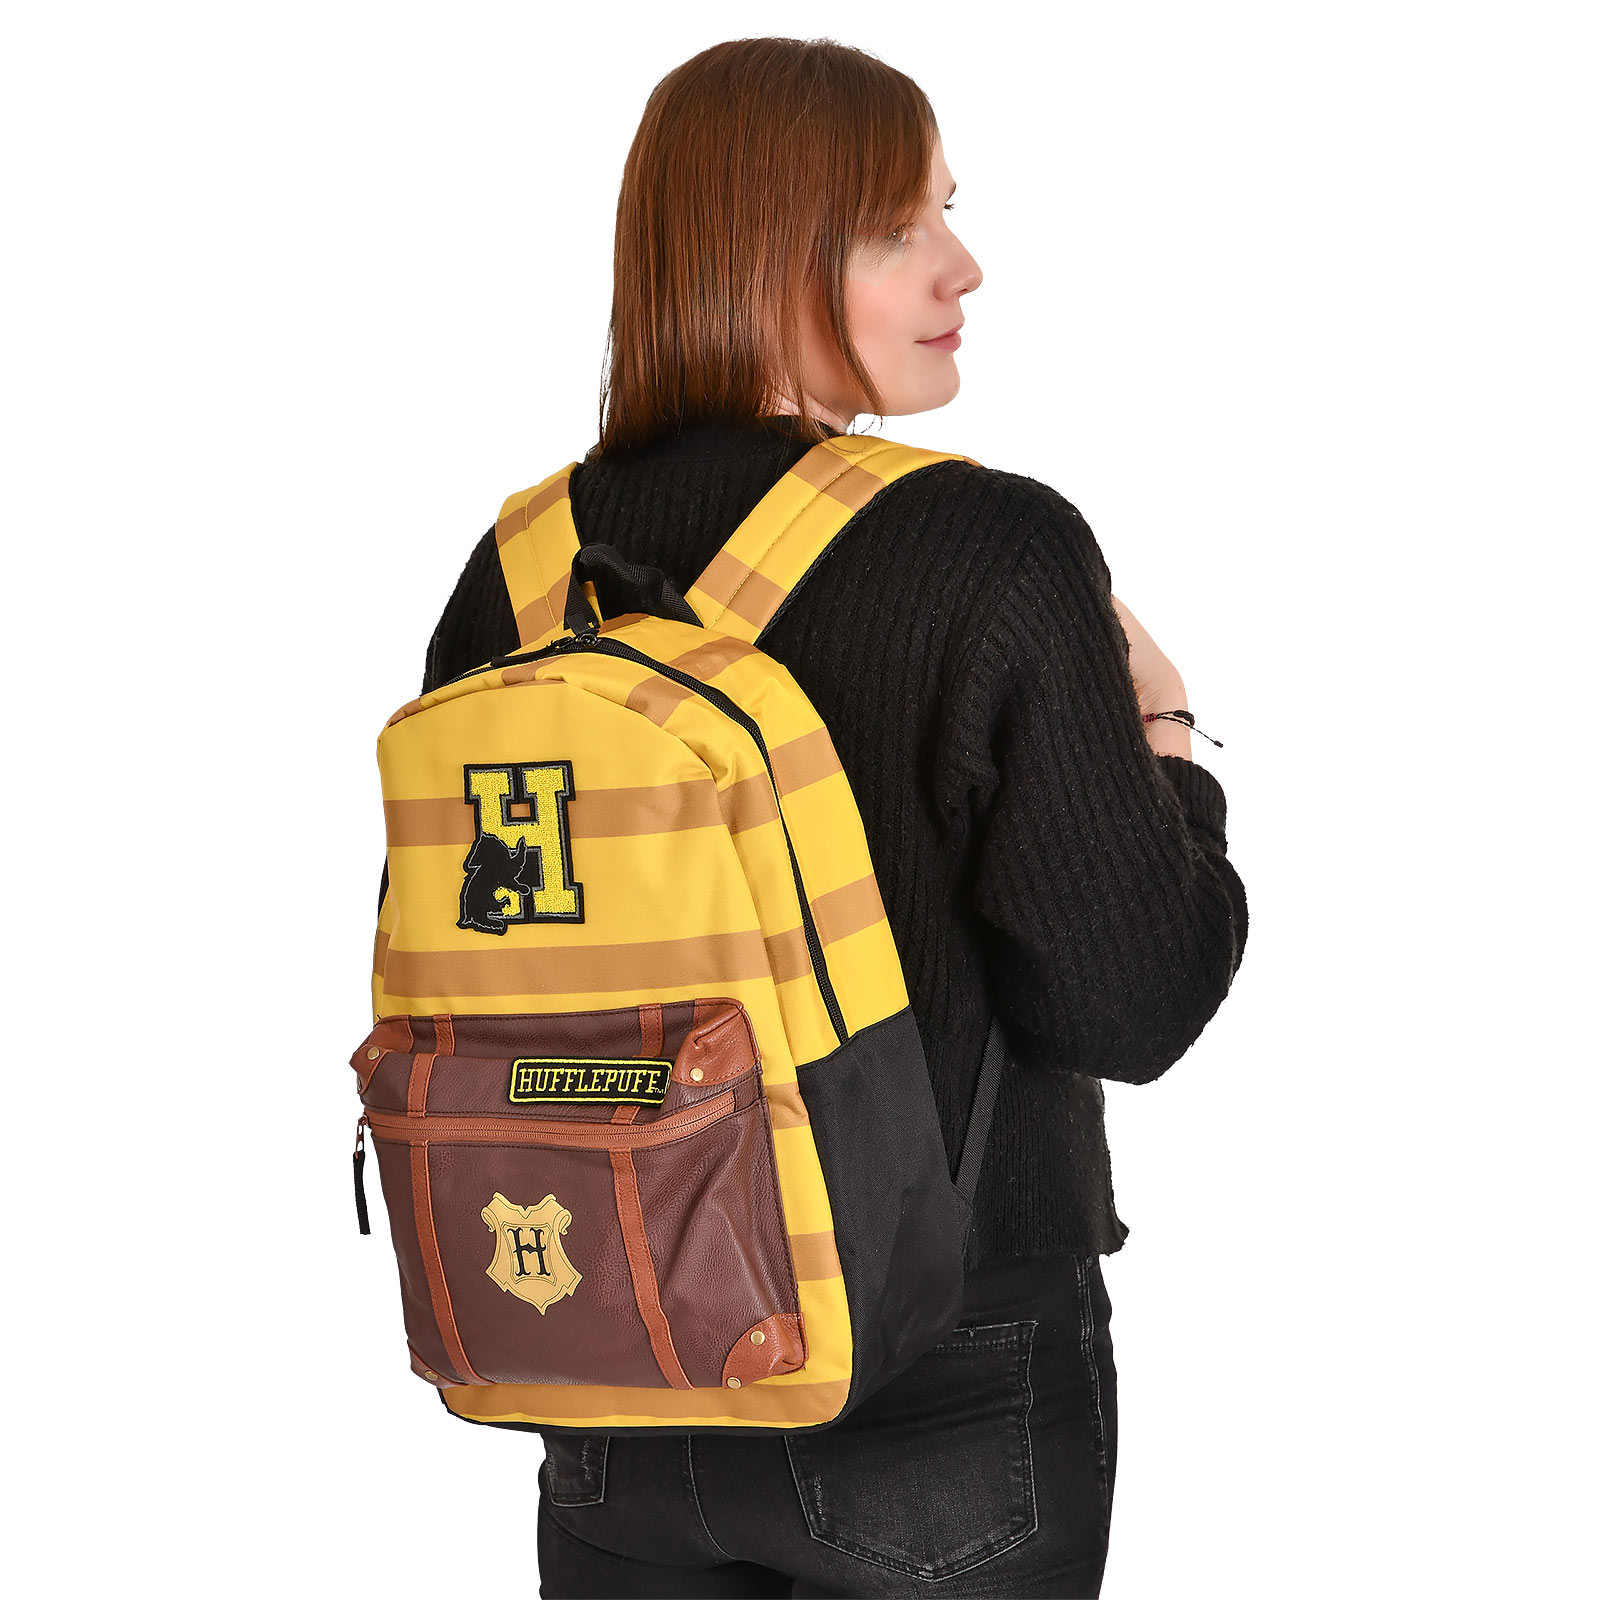 Harry Potter - Hufflepuff School Backpack